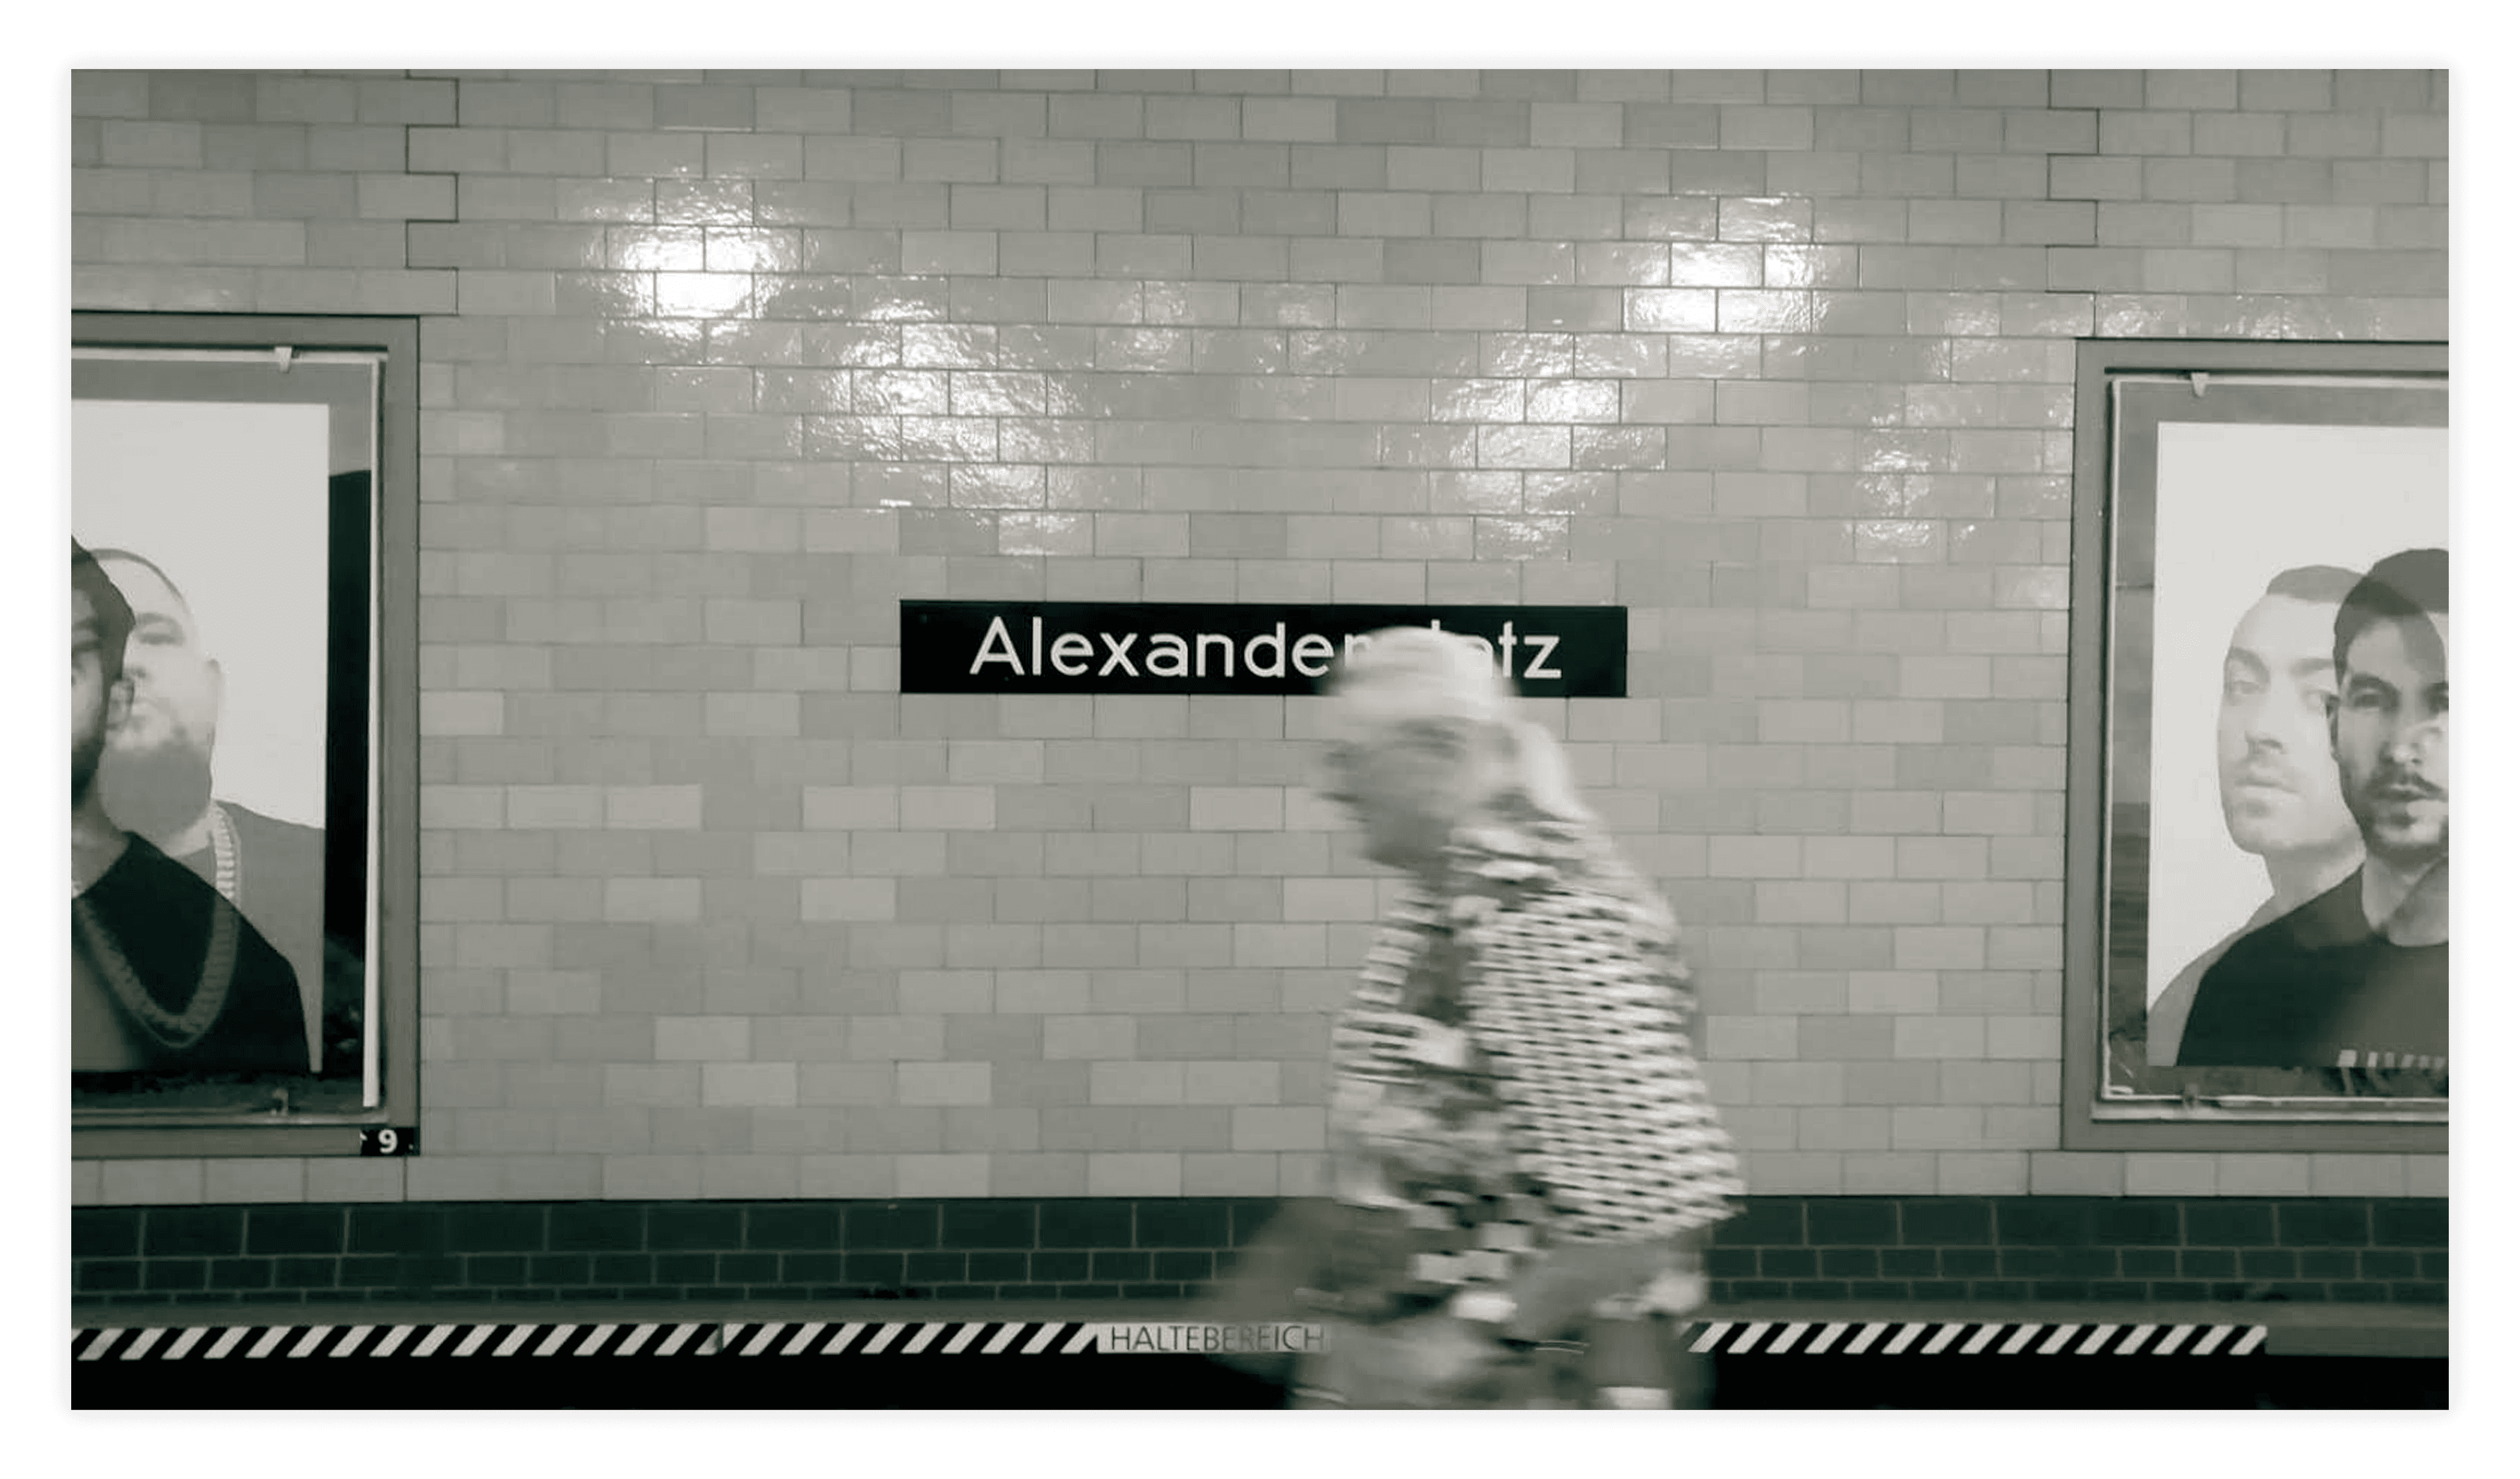 BERLIN - Alexanderplatz Subway Station